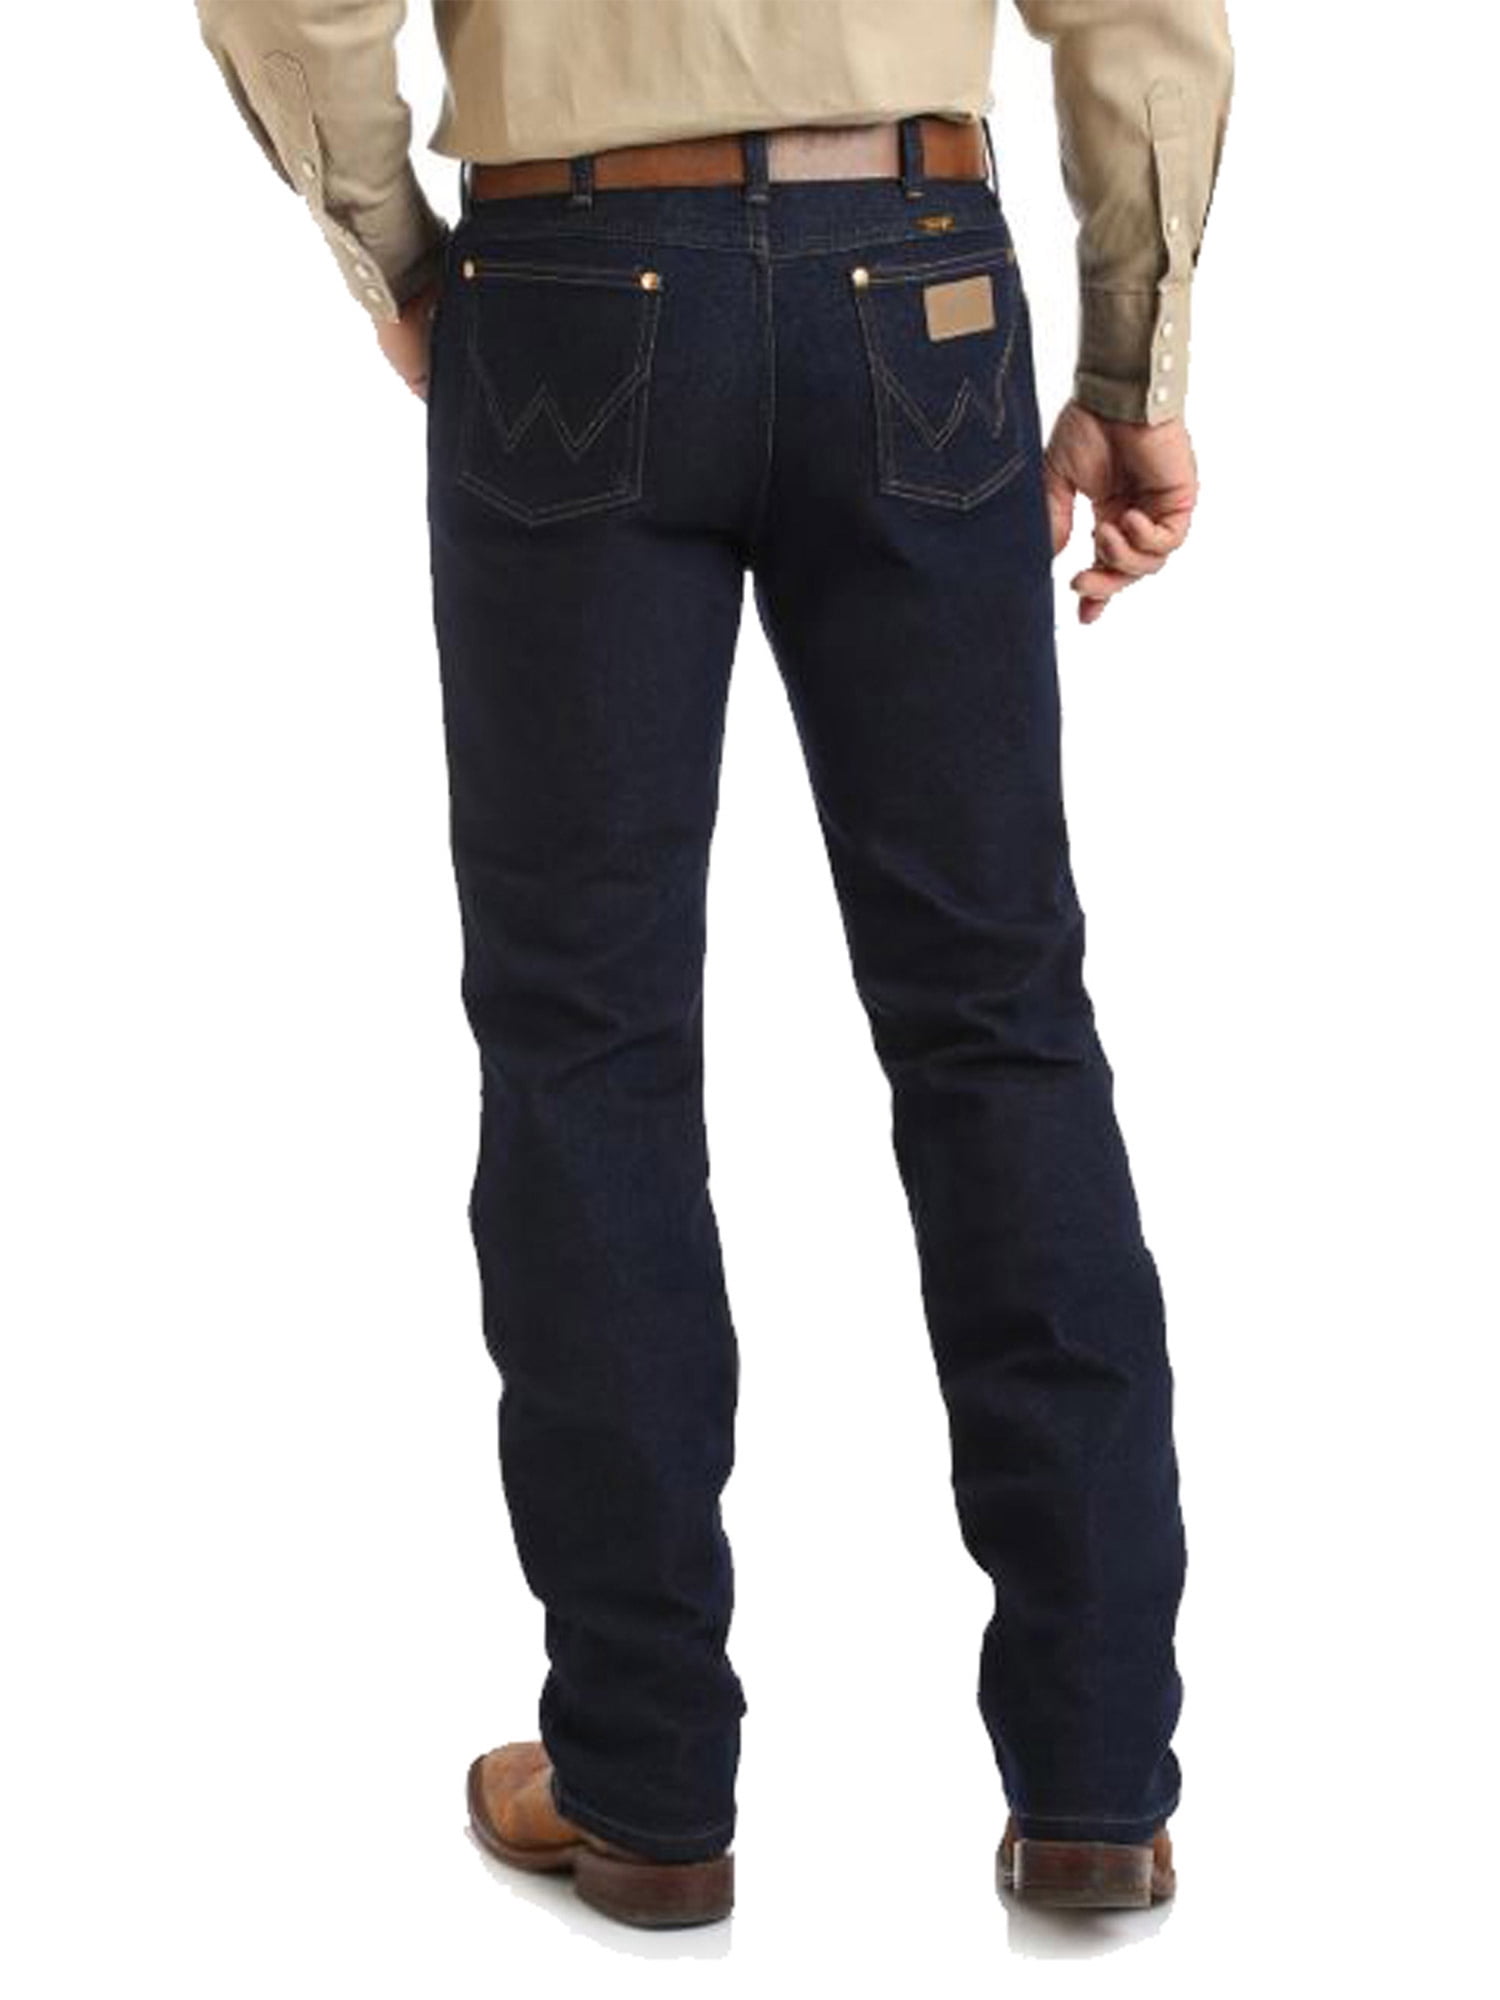 Wrangler Original Fit Active Flex Prewashed Jeans 28-36 